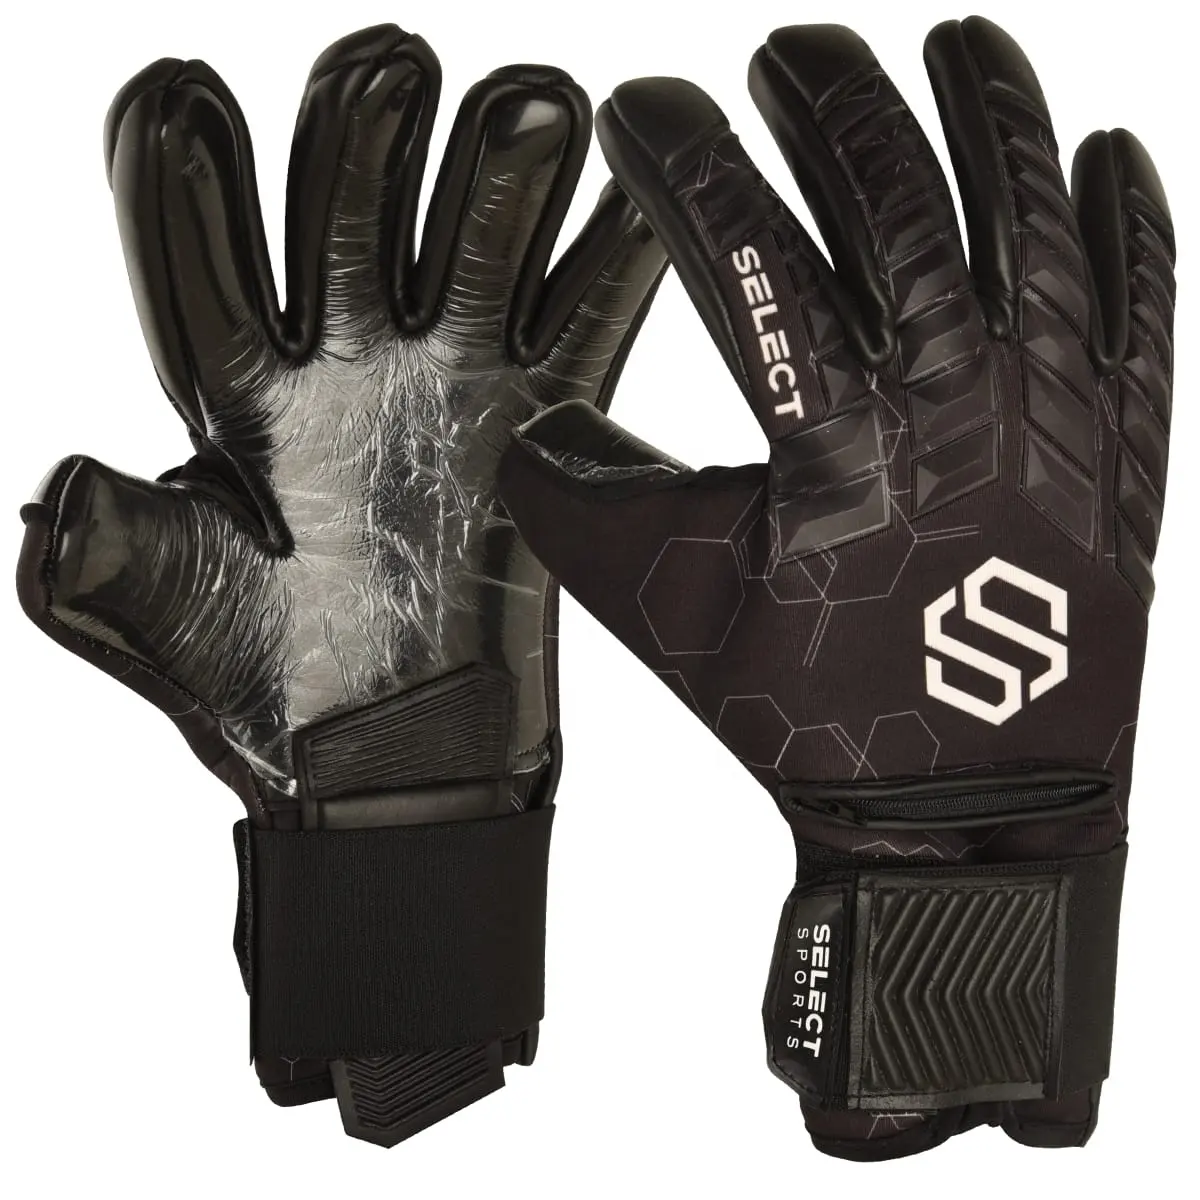 2021 High Quality Custom Made Goalkeeper Gloves for football and soccer training Gloves